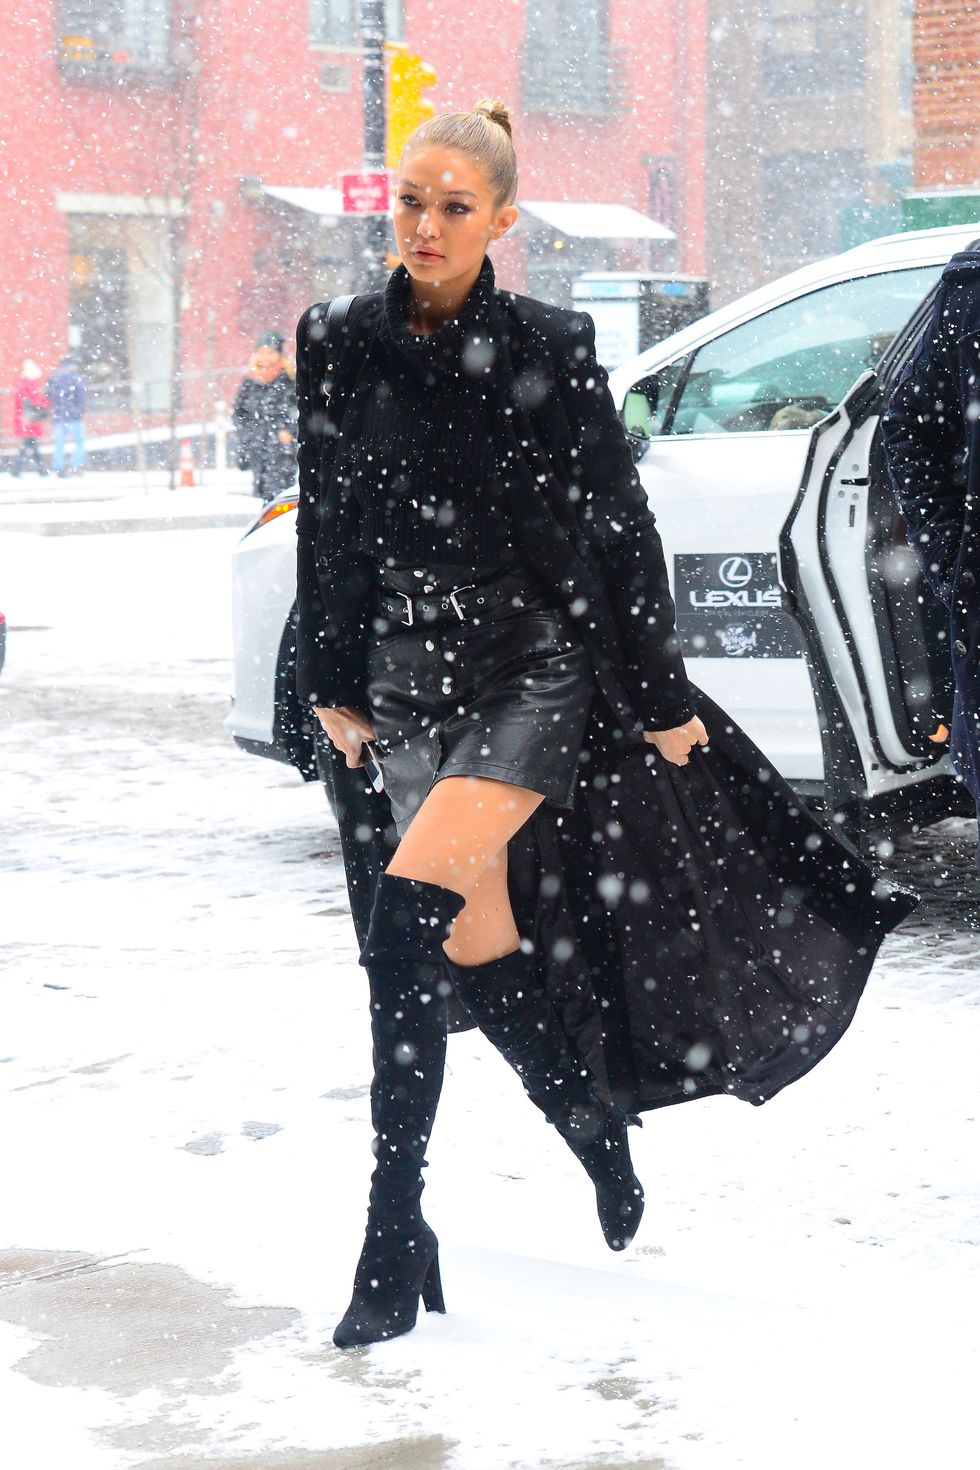 Gigi Hadid in the snow